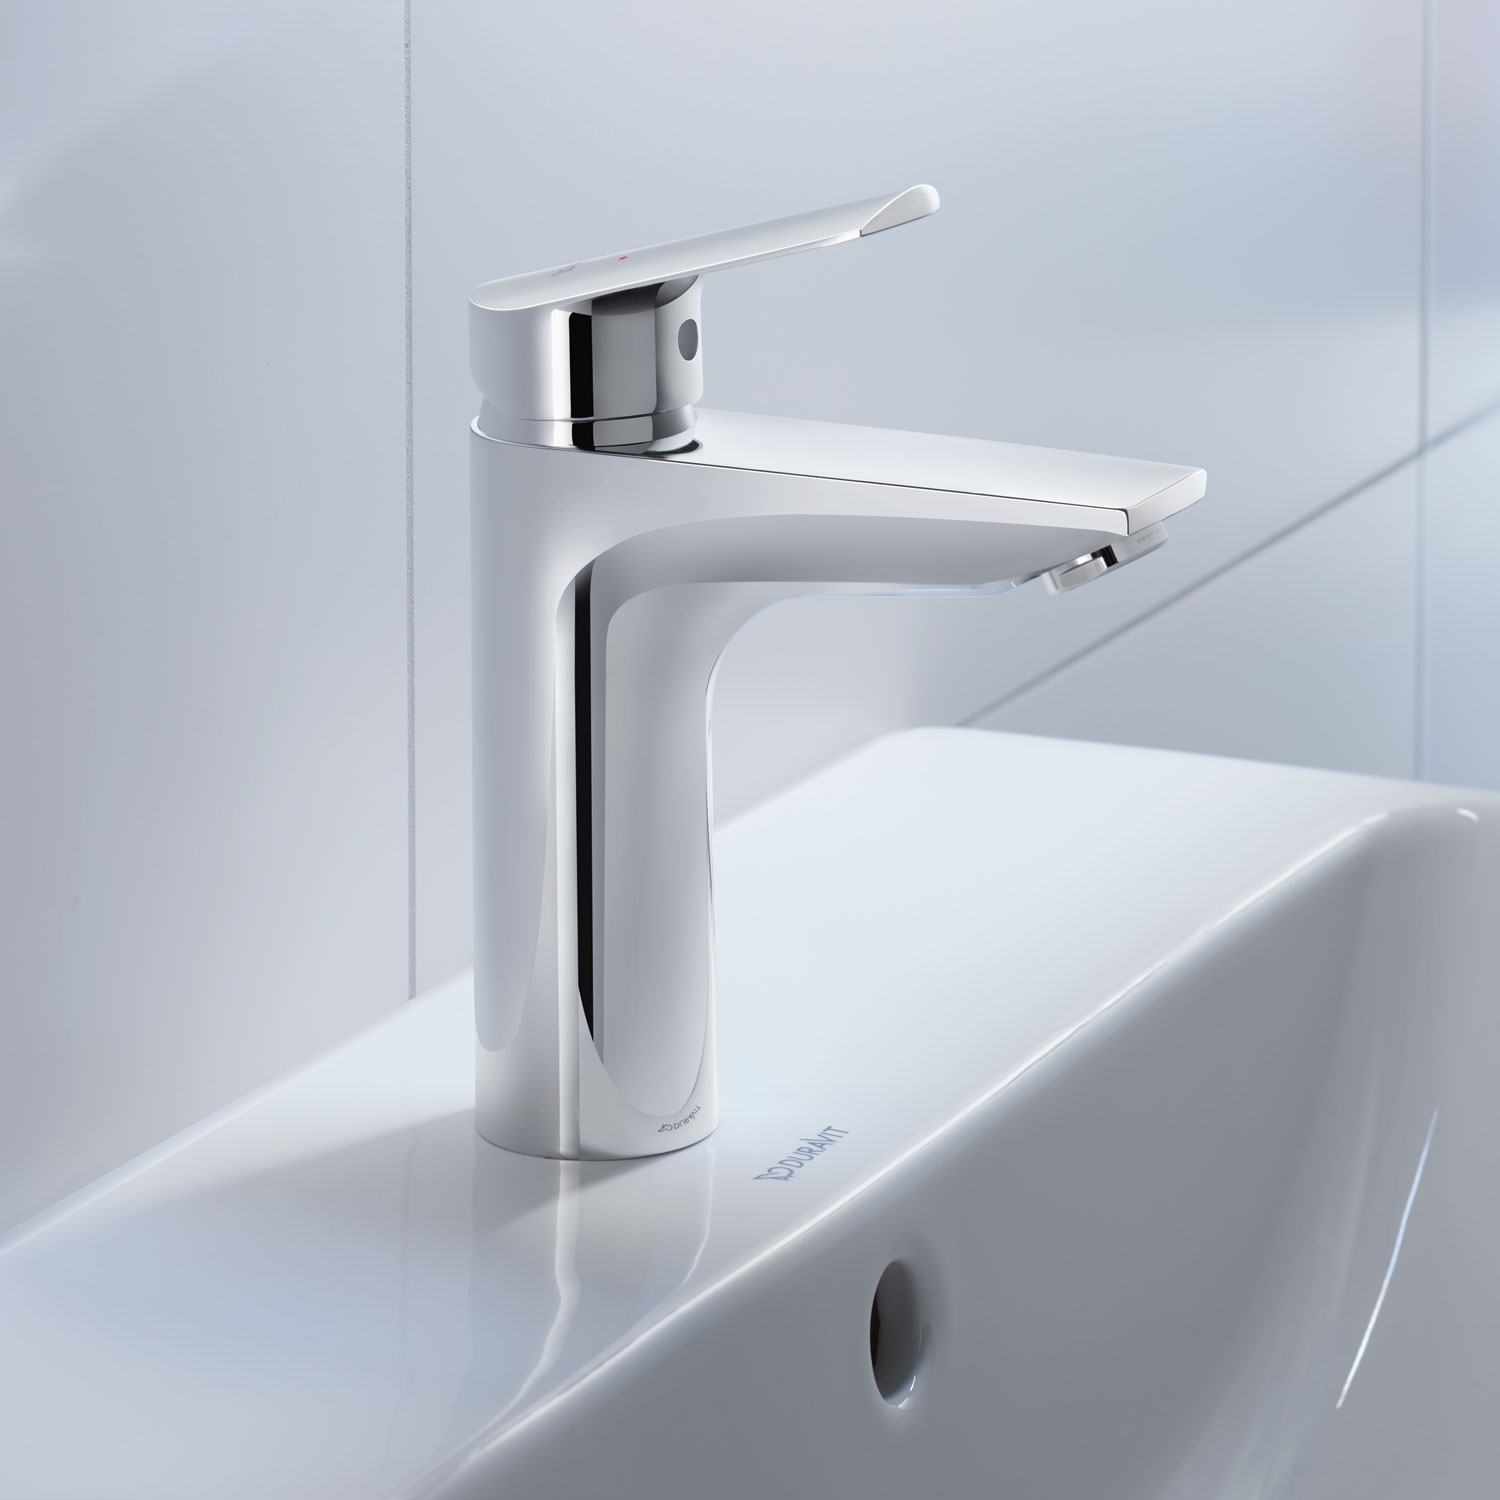 Duravit No.1 faucet on handrinse basin
